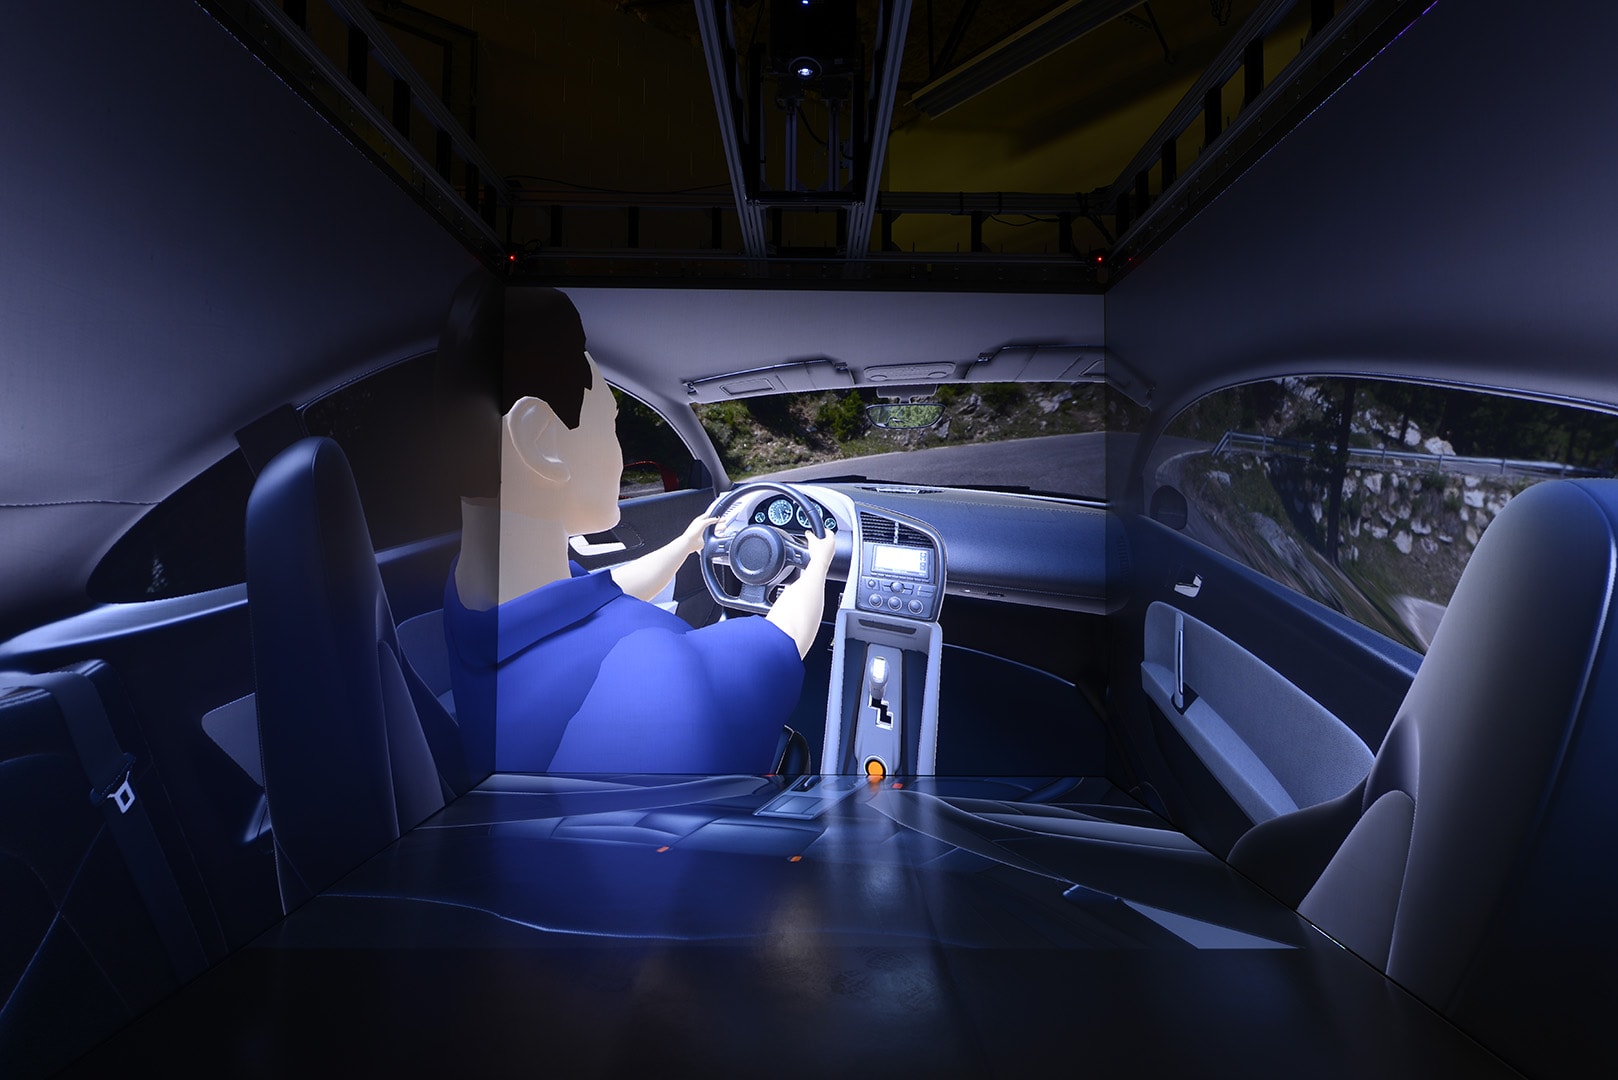 HD IGI VR Room visualization automotive simulation rendering